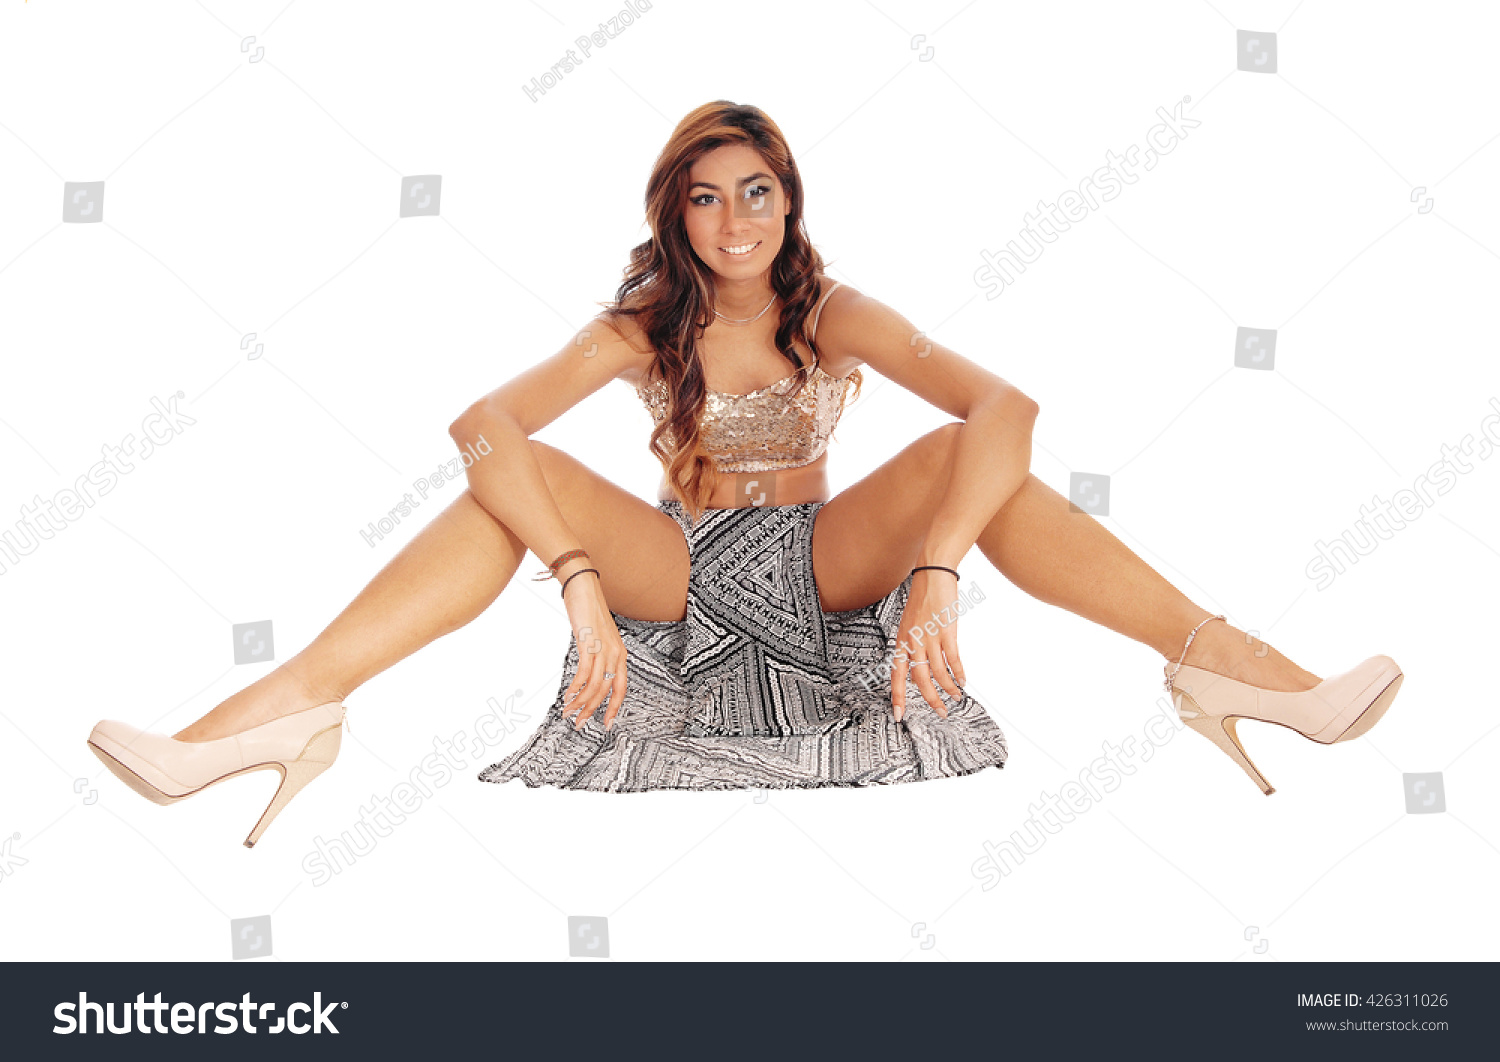 Skirt Spread Legs